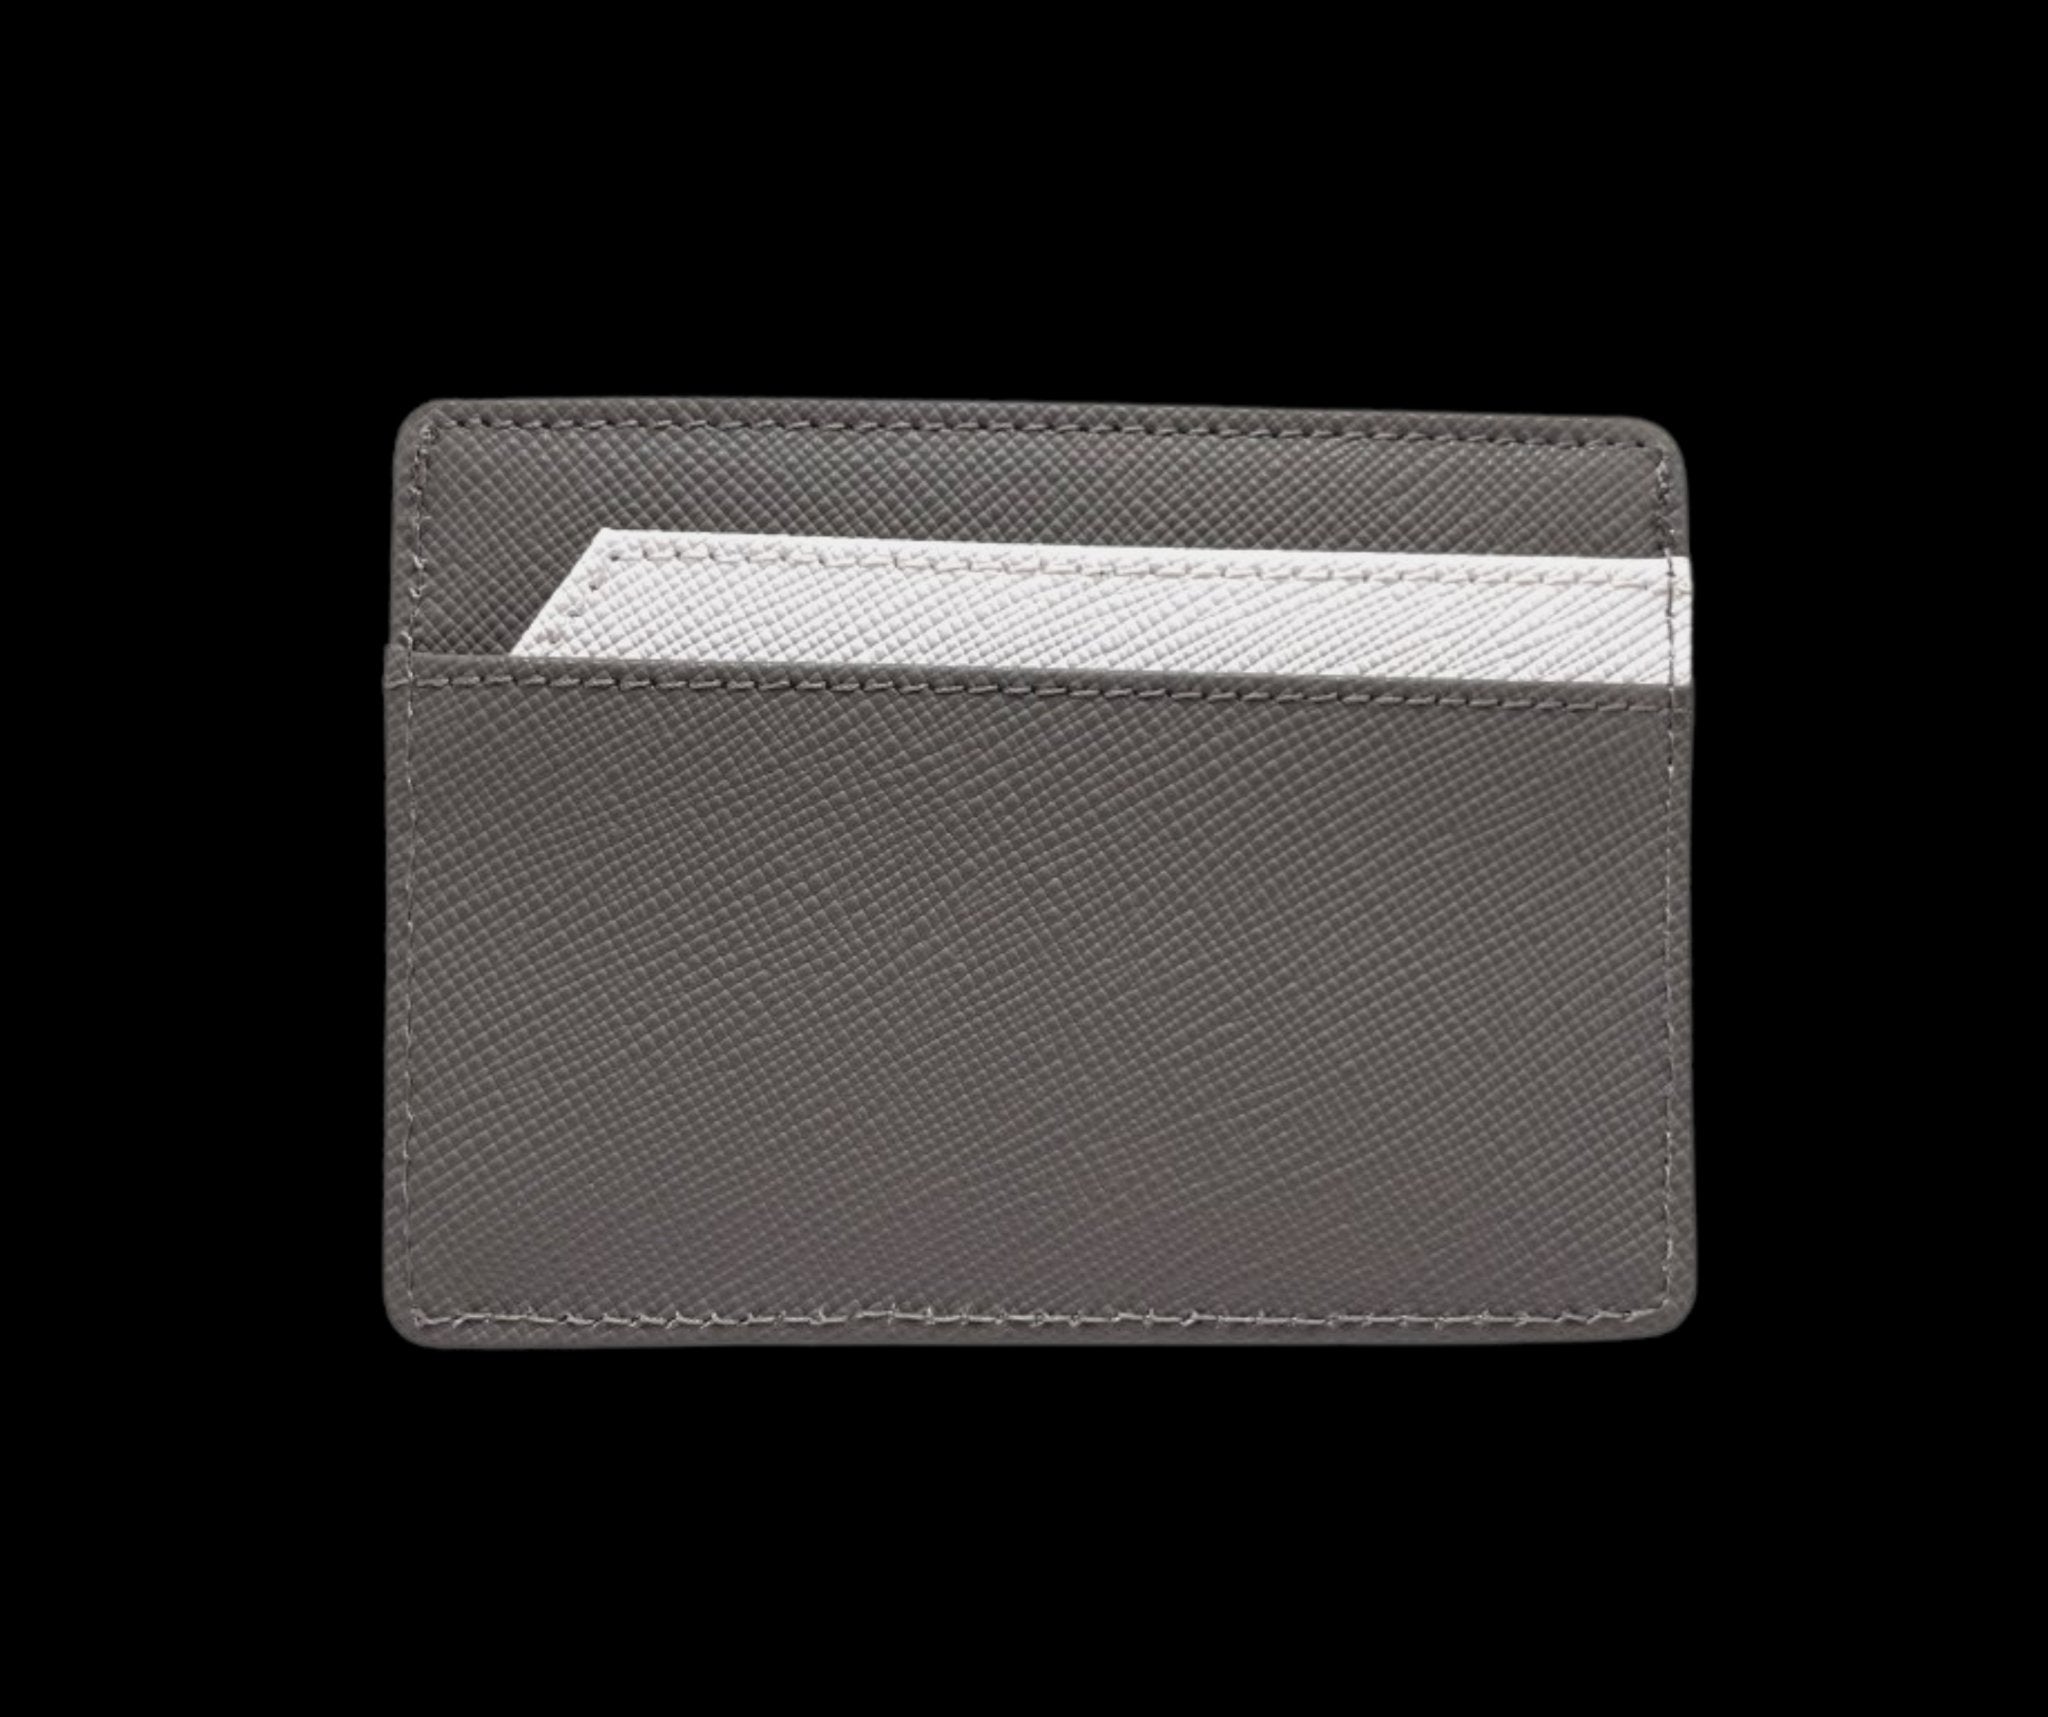 PRADA SAFFIANO LEATHER CARD HOLDER Black/Silver Wallet